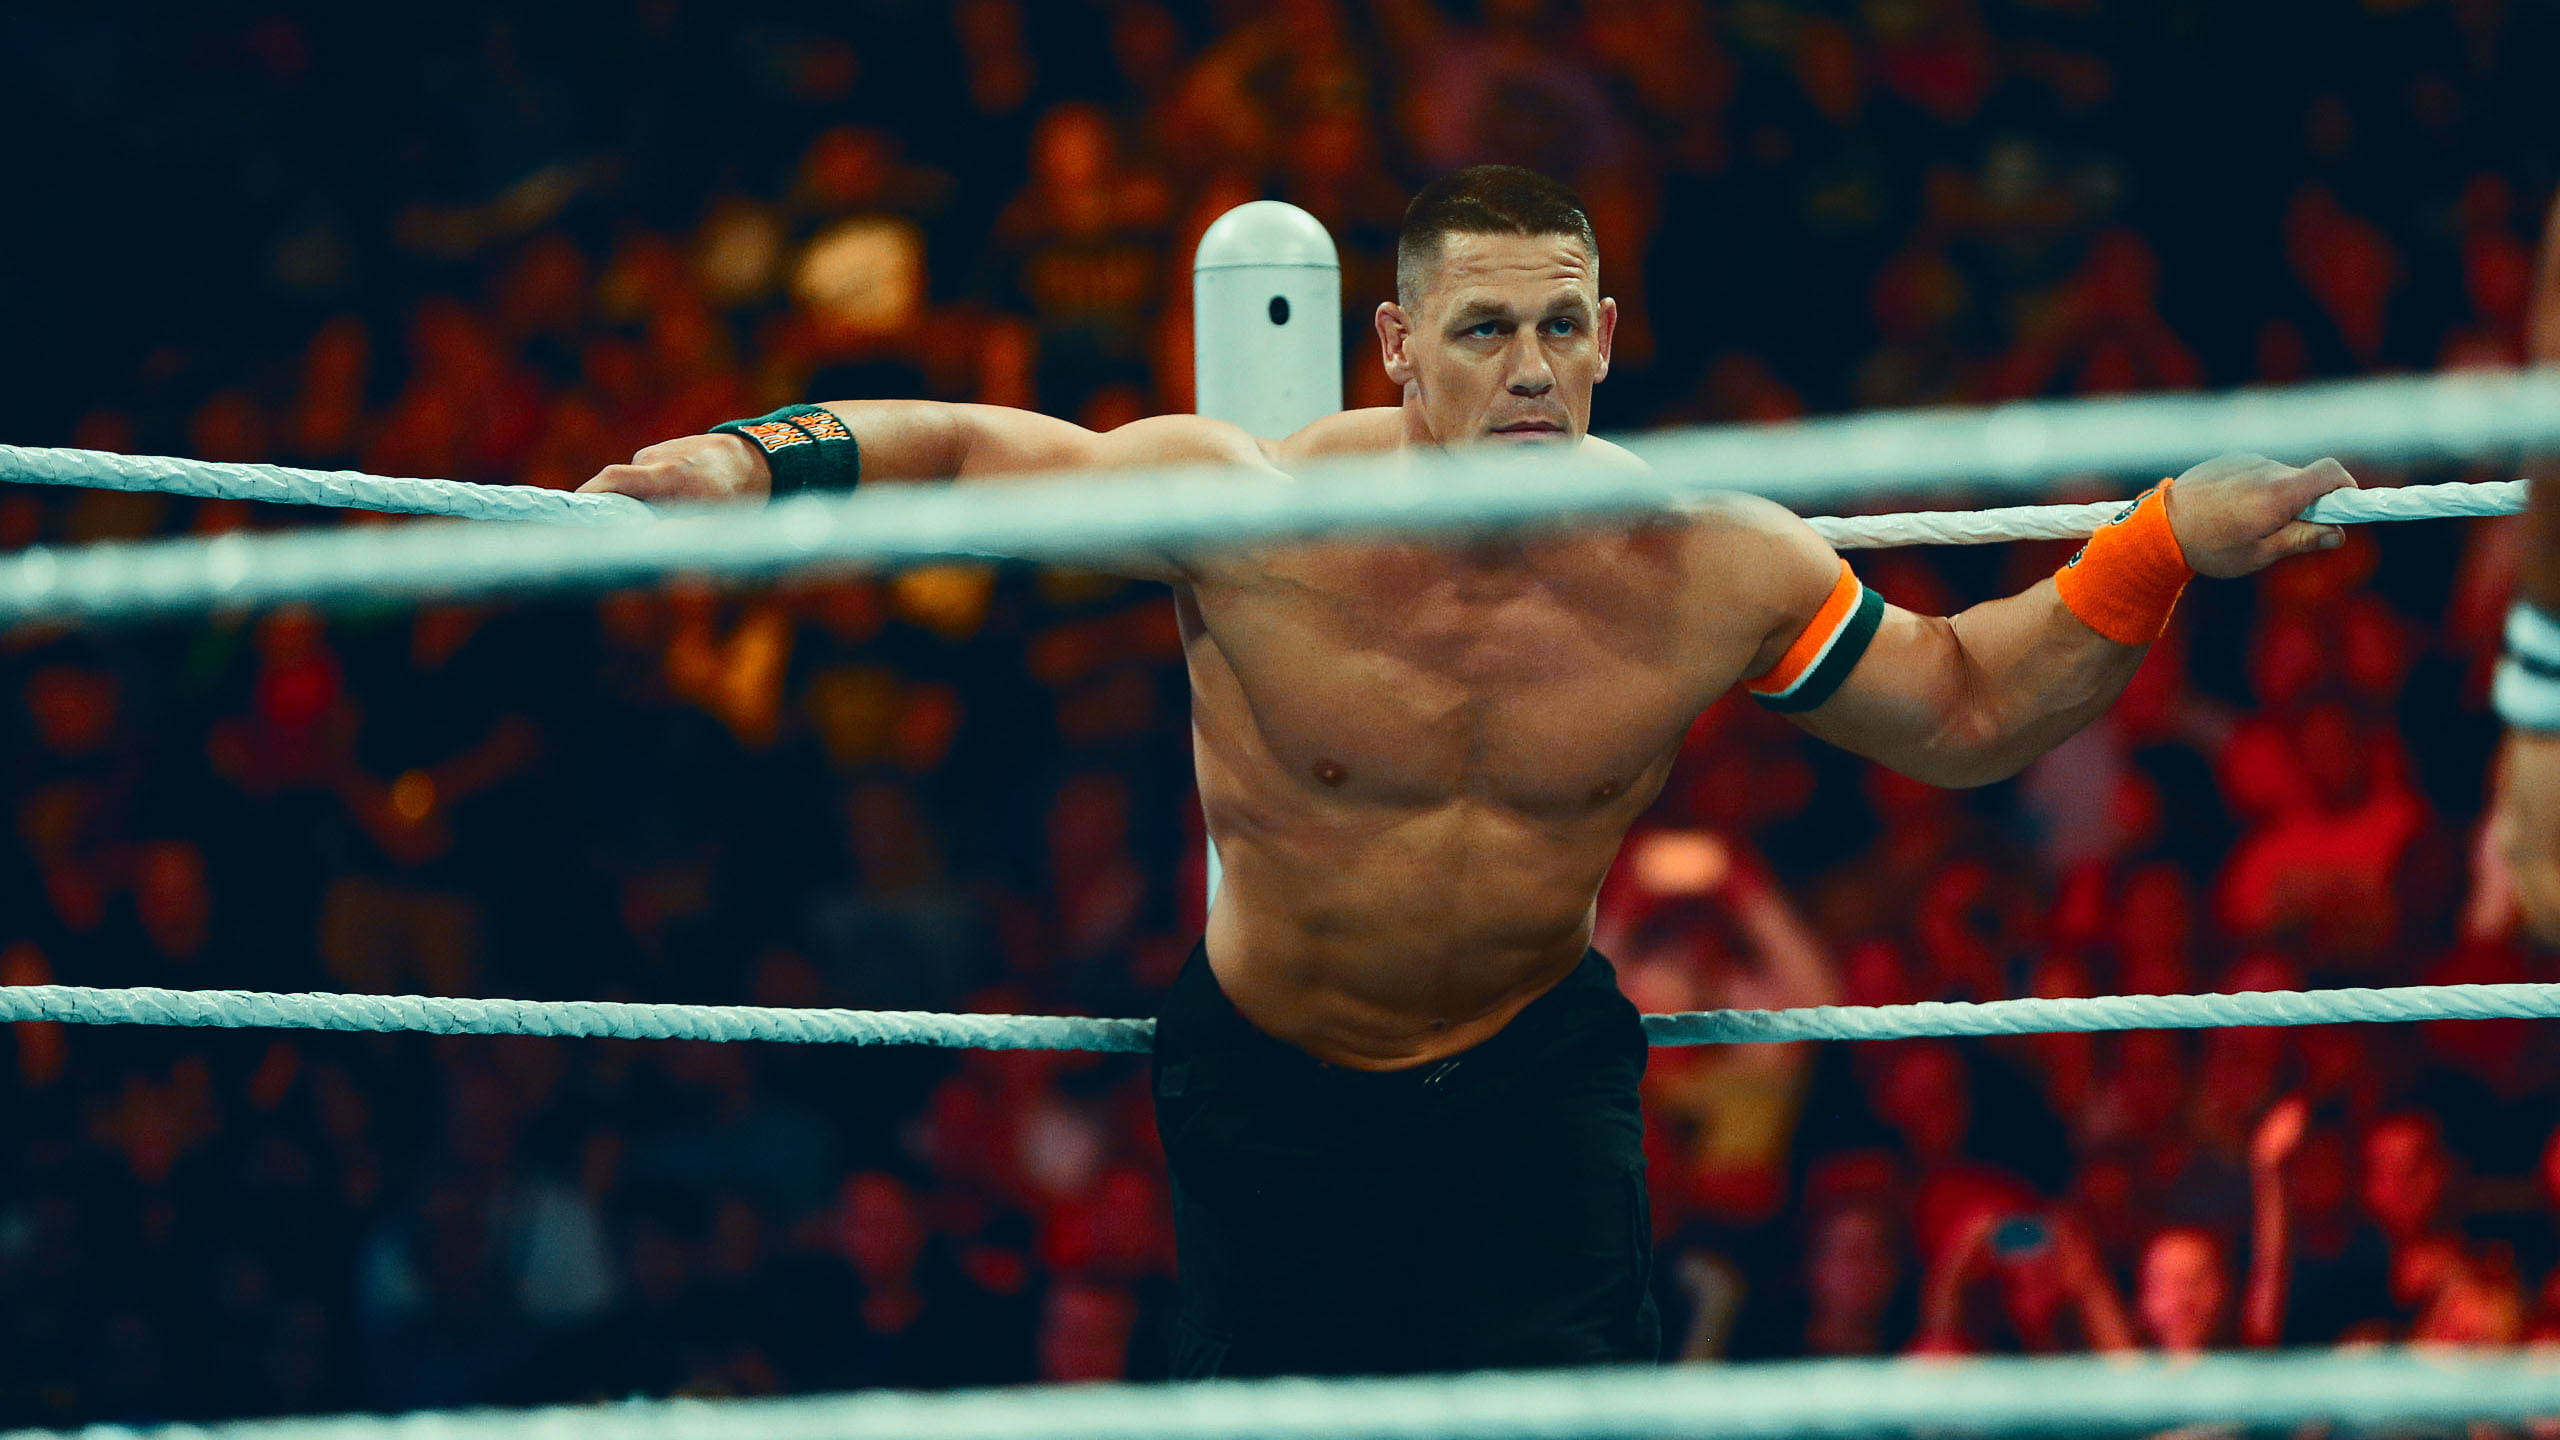 2560x1440 Download John Cena In The Ring Wallpaper